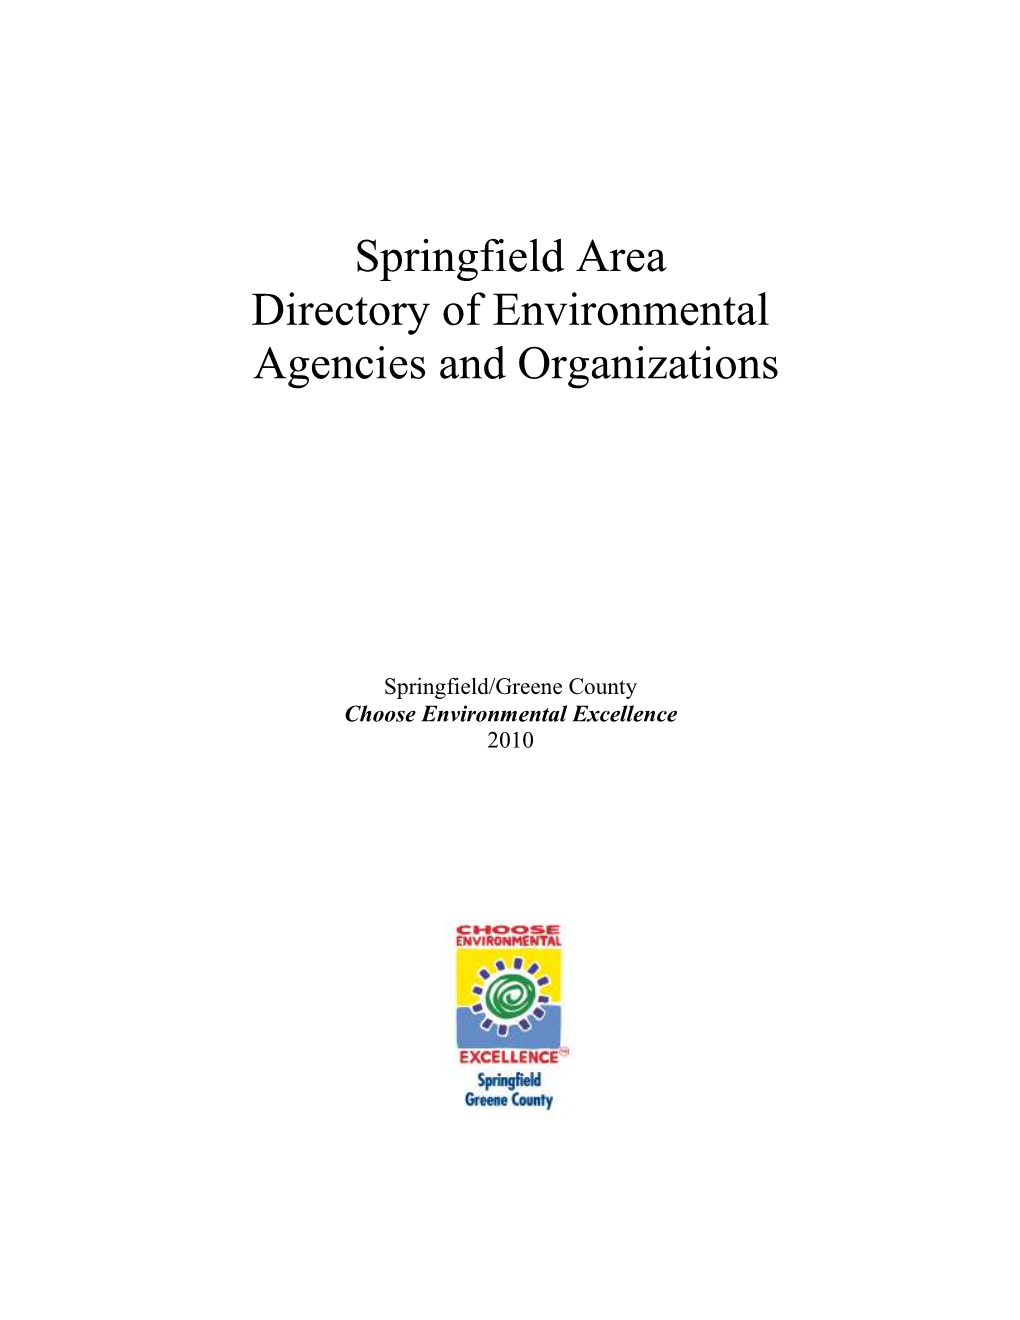 Springfield Area Directory of Environmental Agencies and Organizations